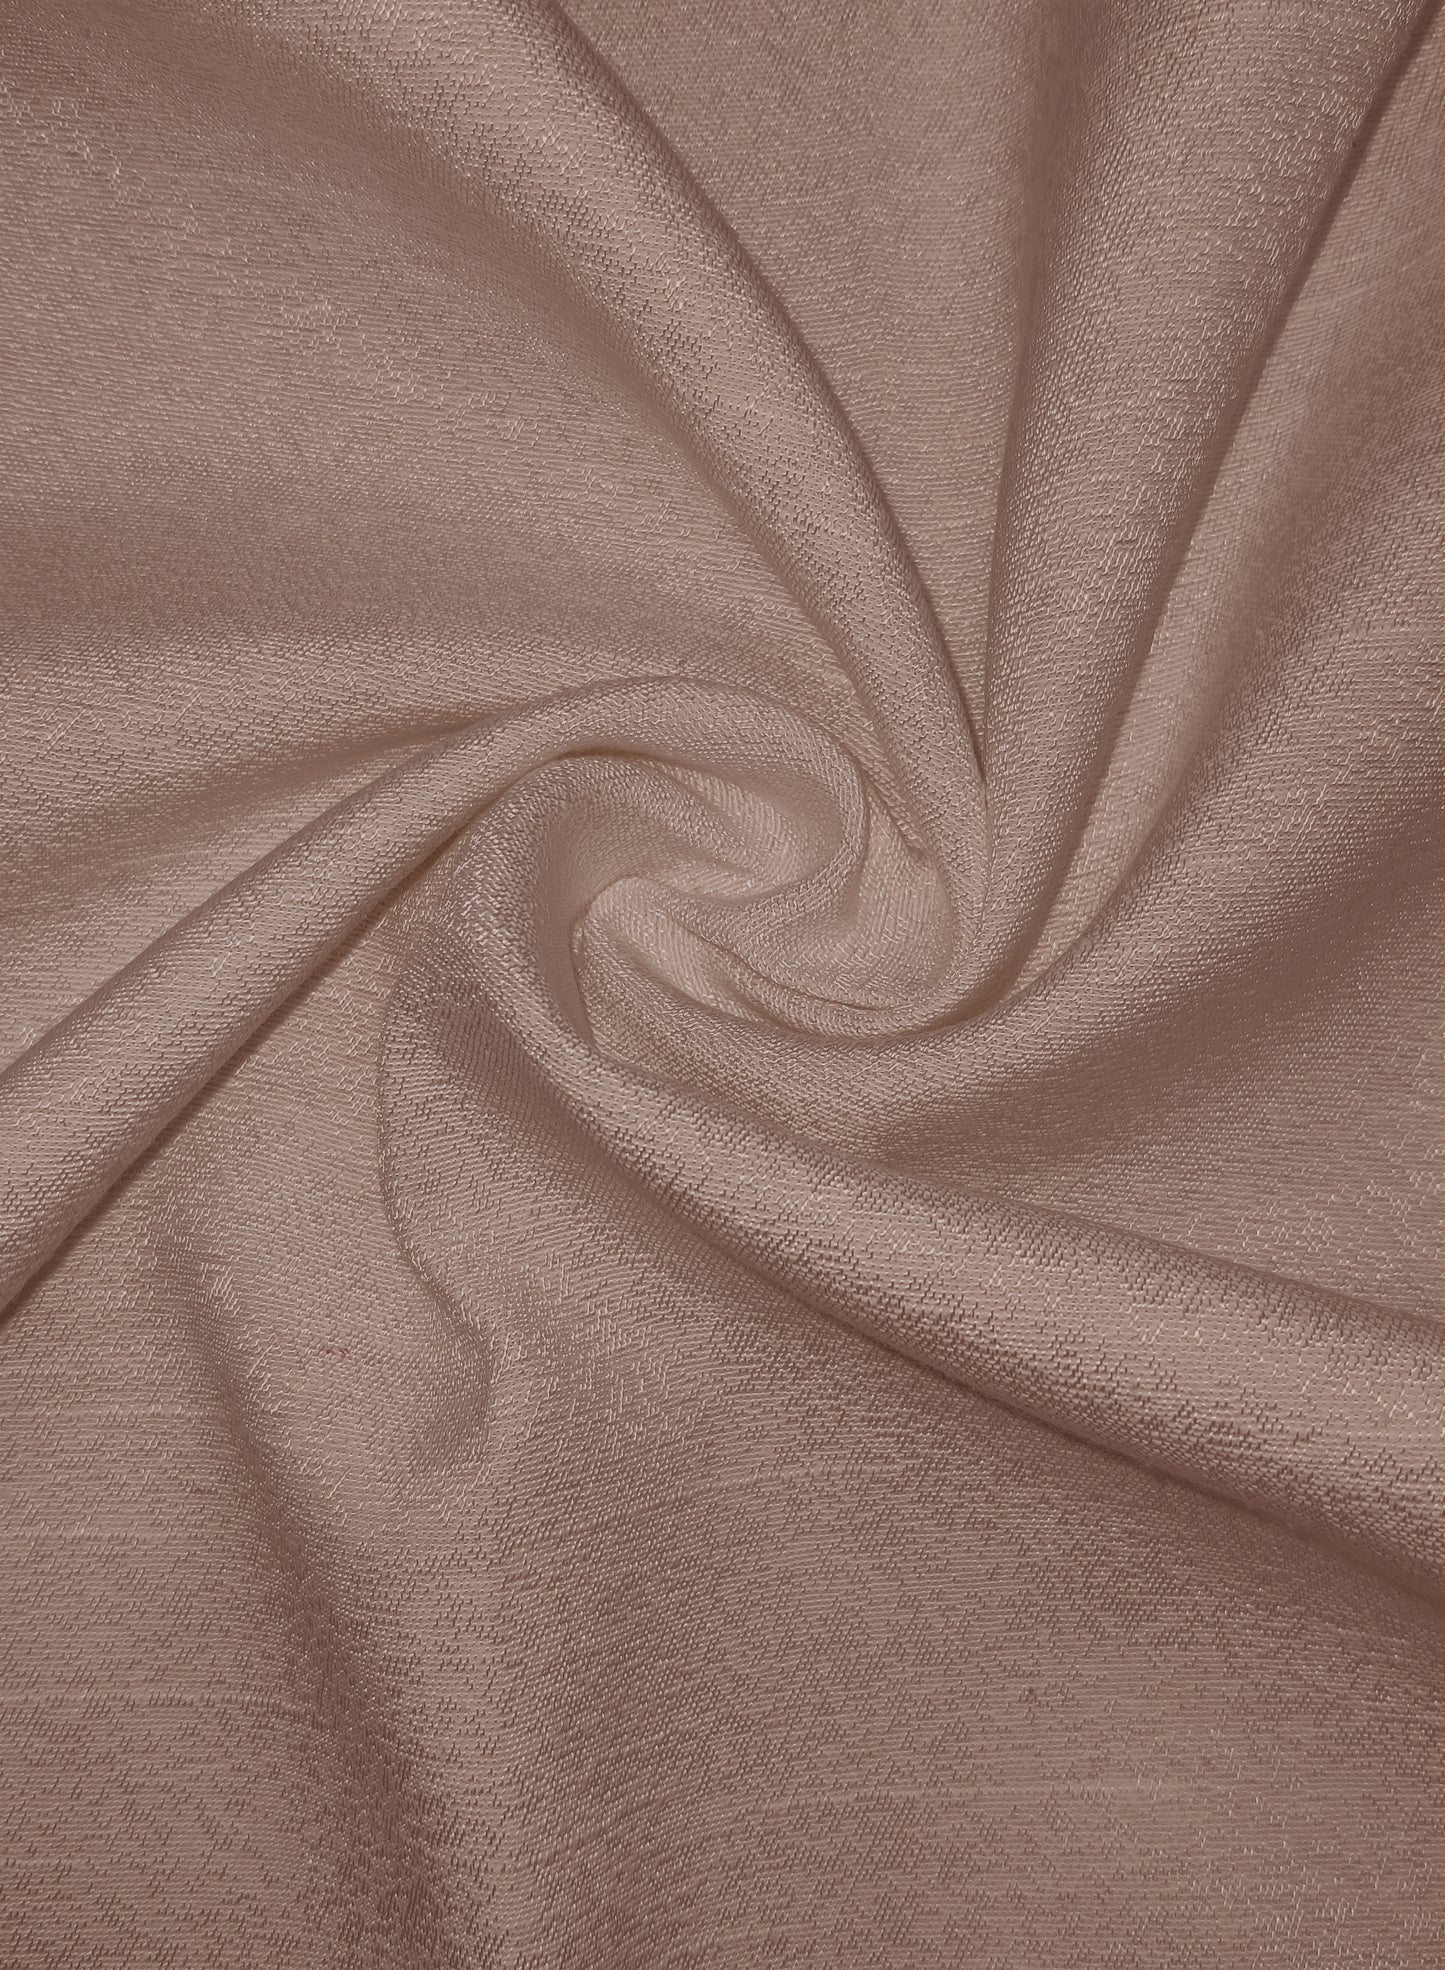 Casper Plain Curtain | Pale Brown